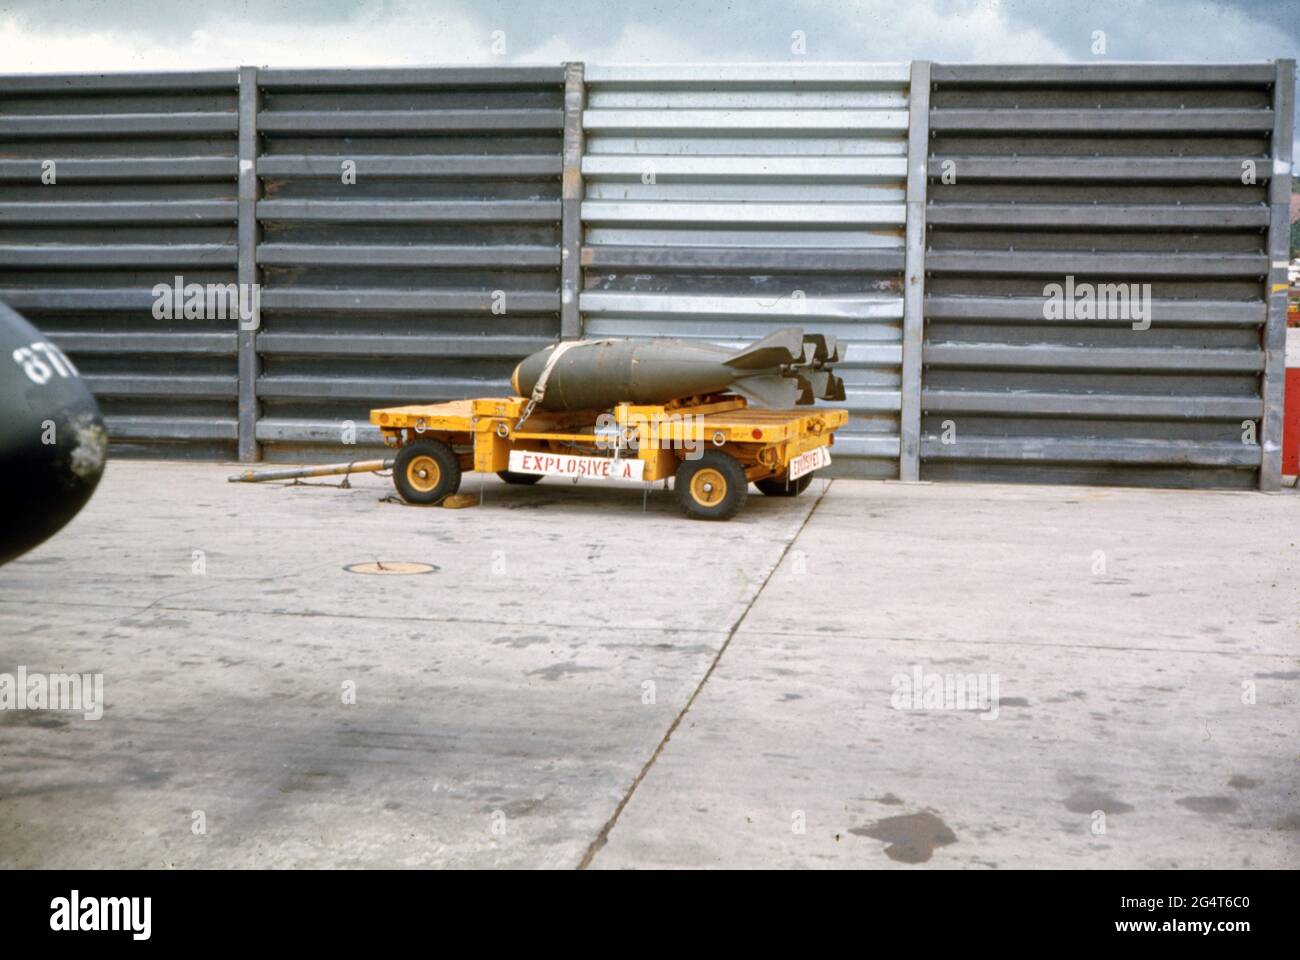 USAF United States Air Force Allzweckbombe M 117 - General Purpose Bomb M117 Stock Photo